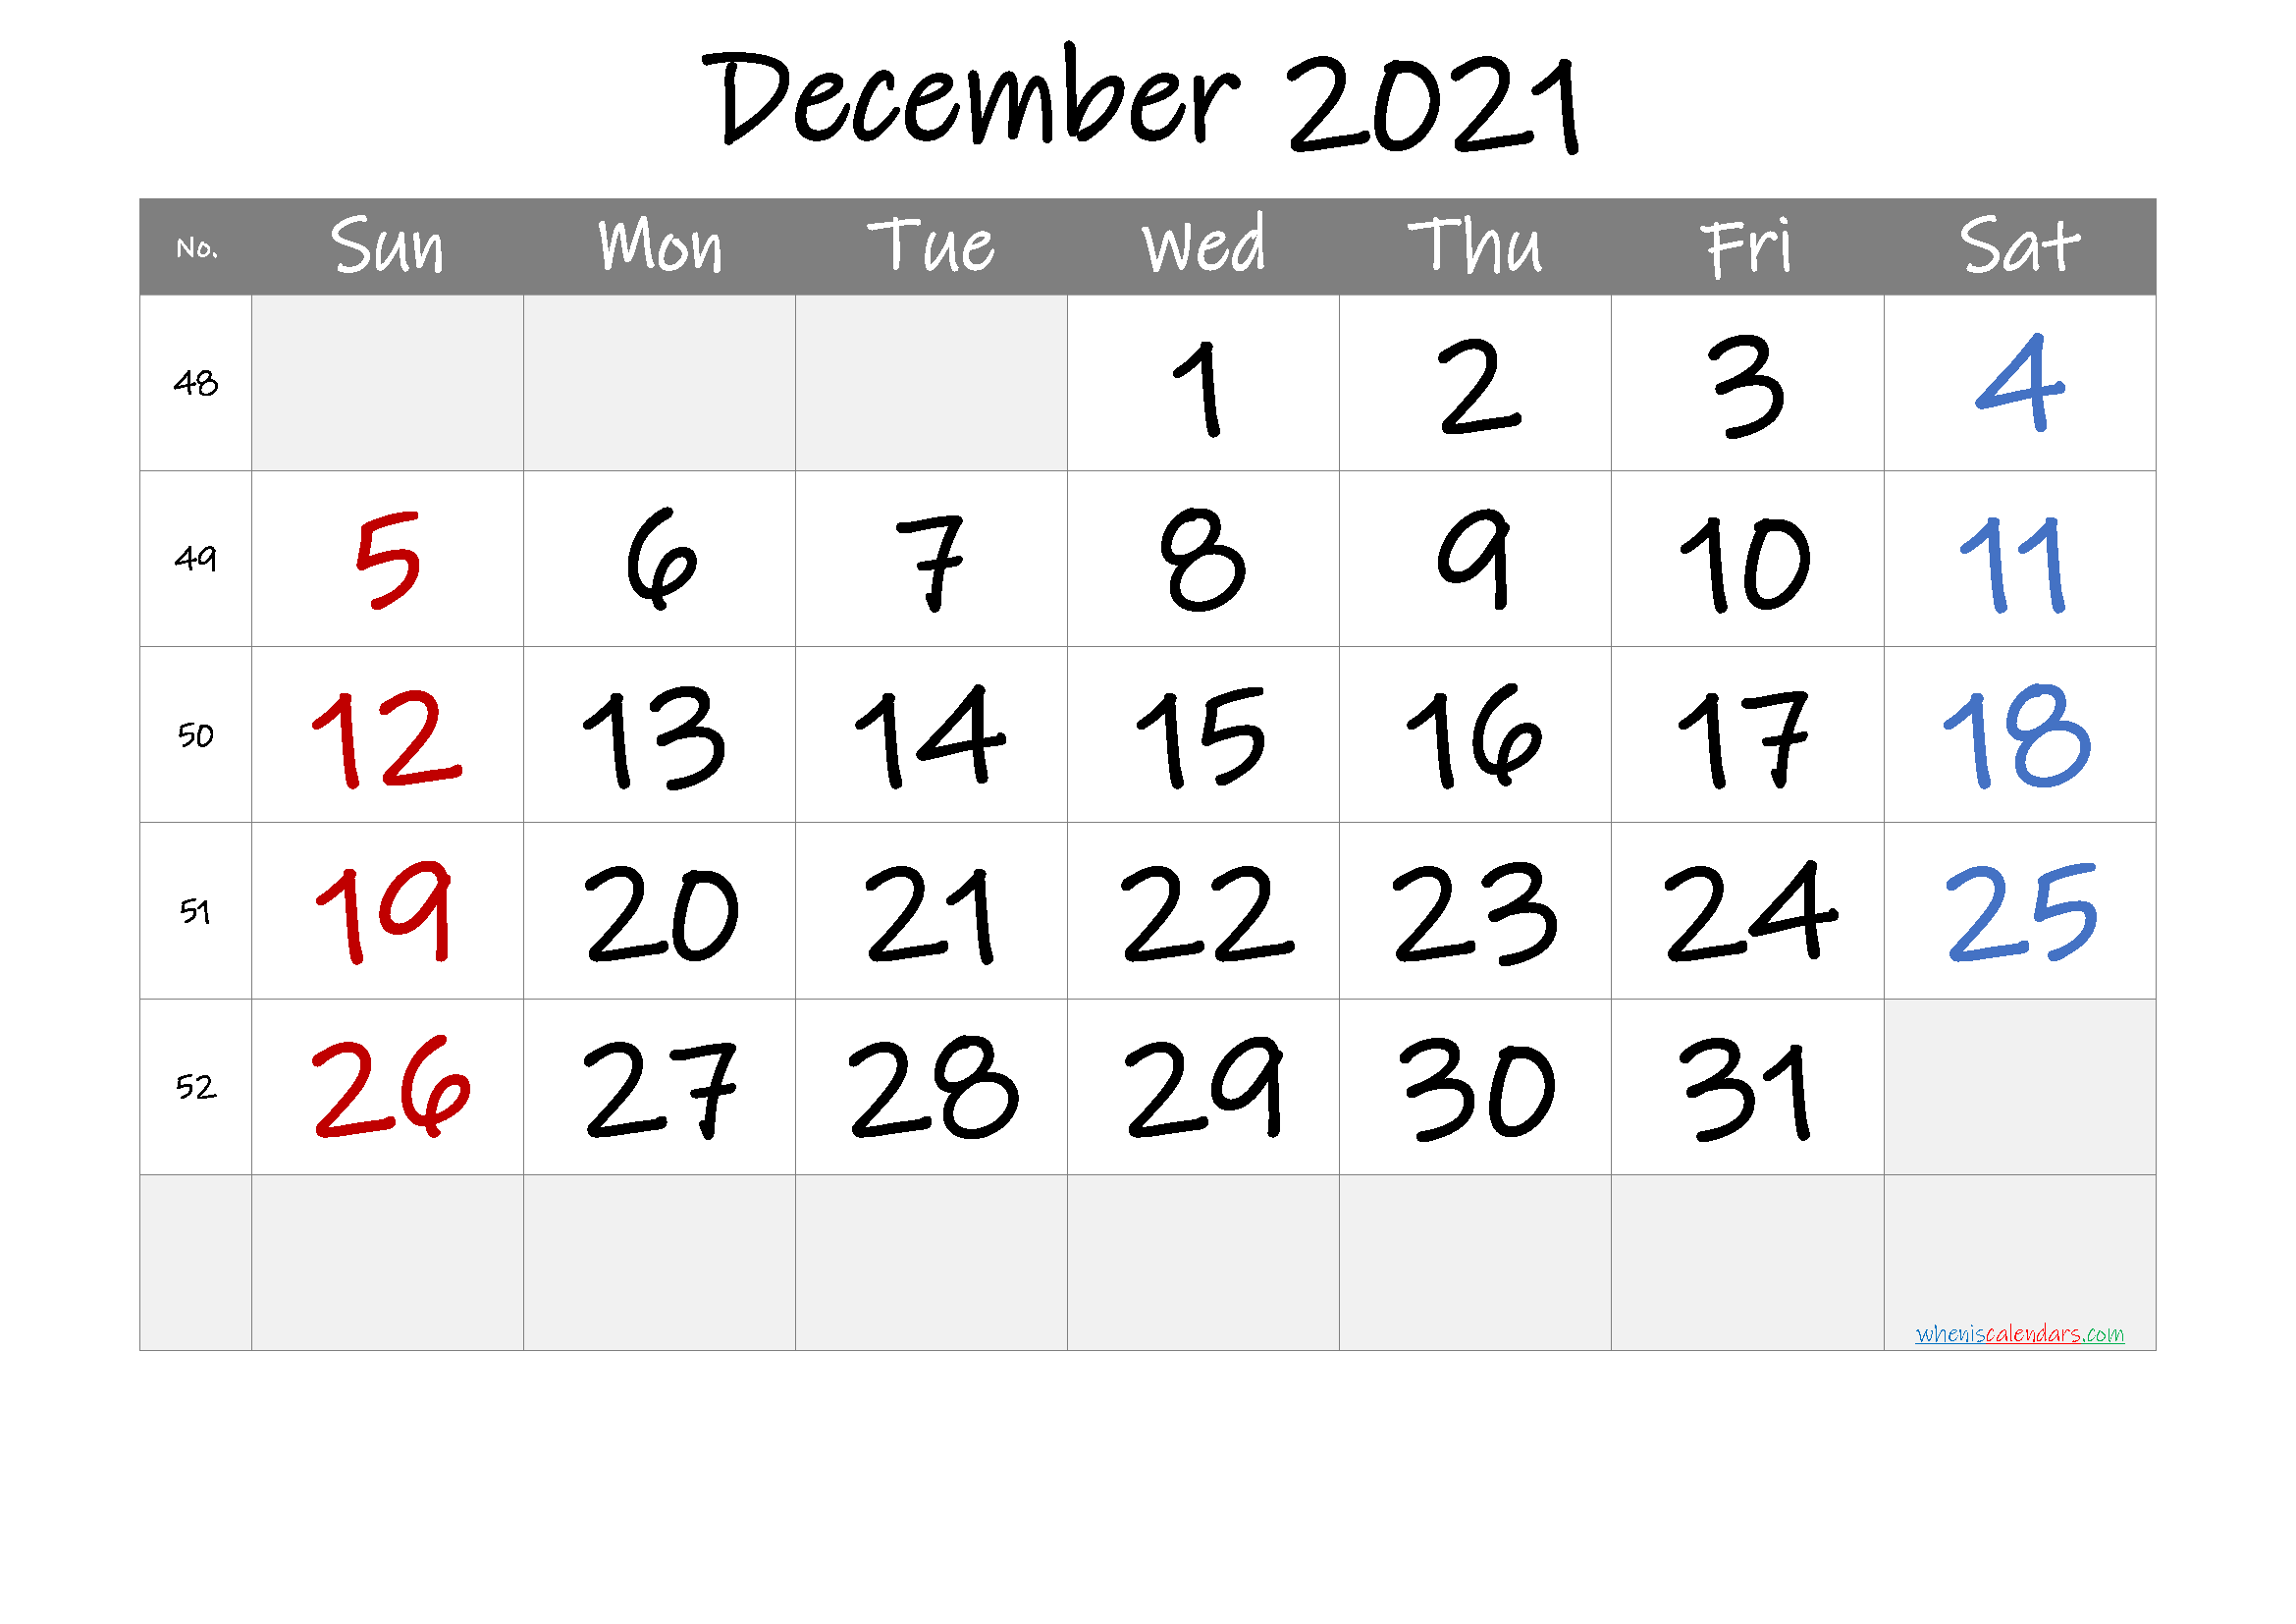 December 2021 Printable Calendar - 6 Templates - Free ...